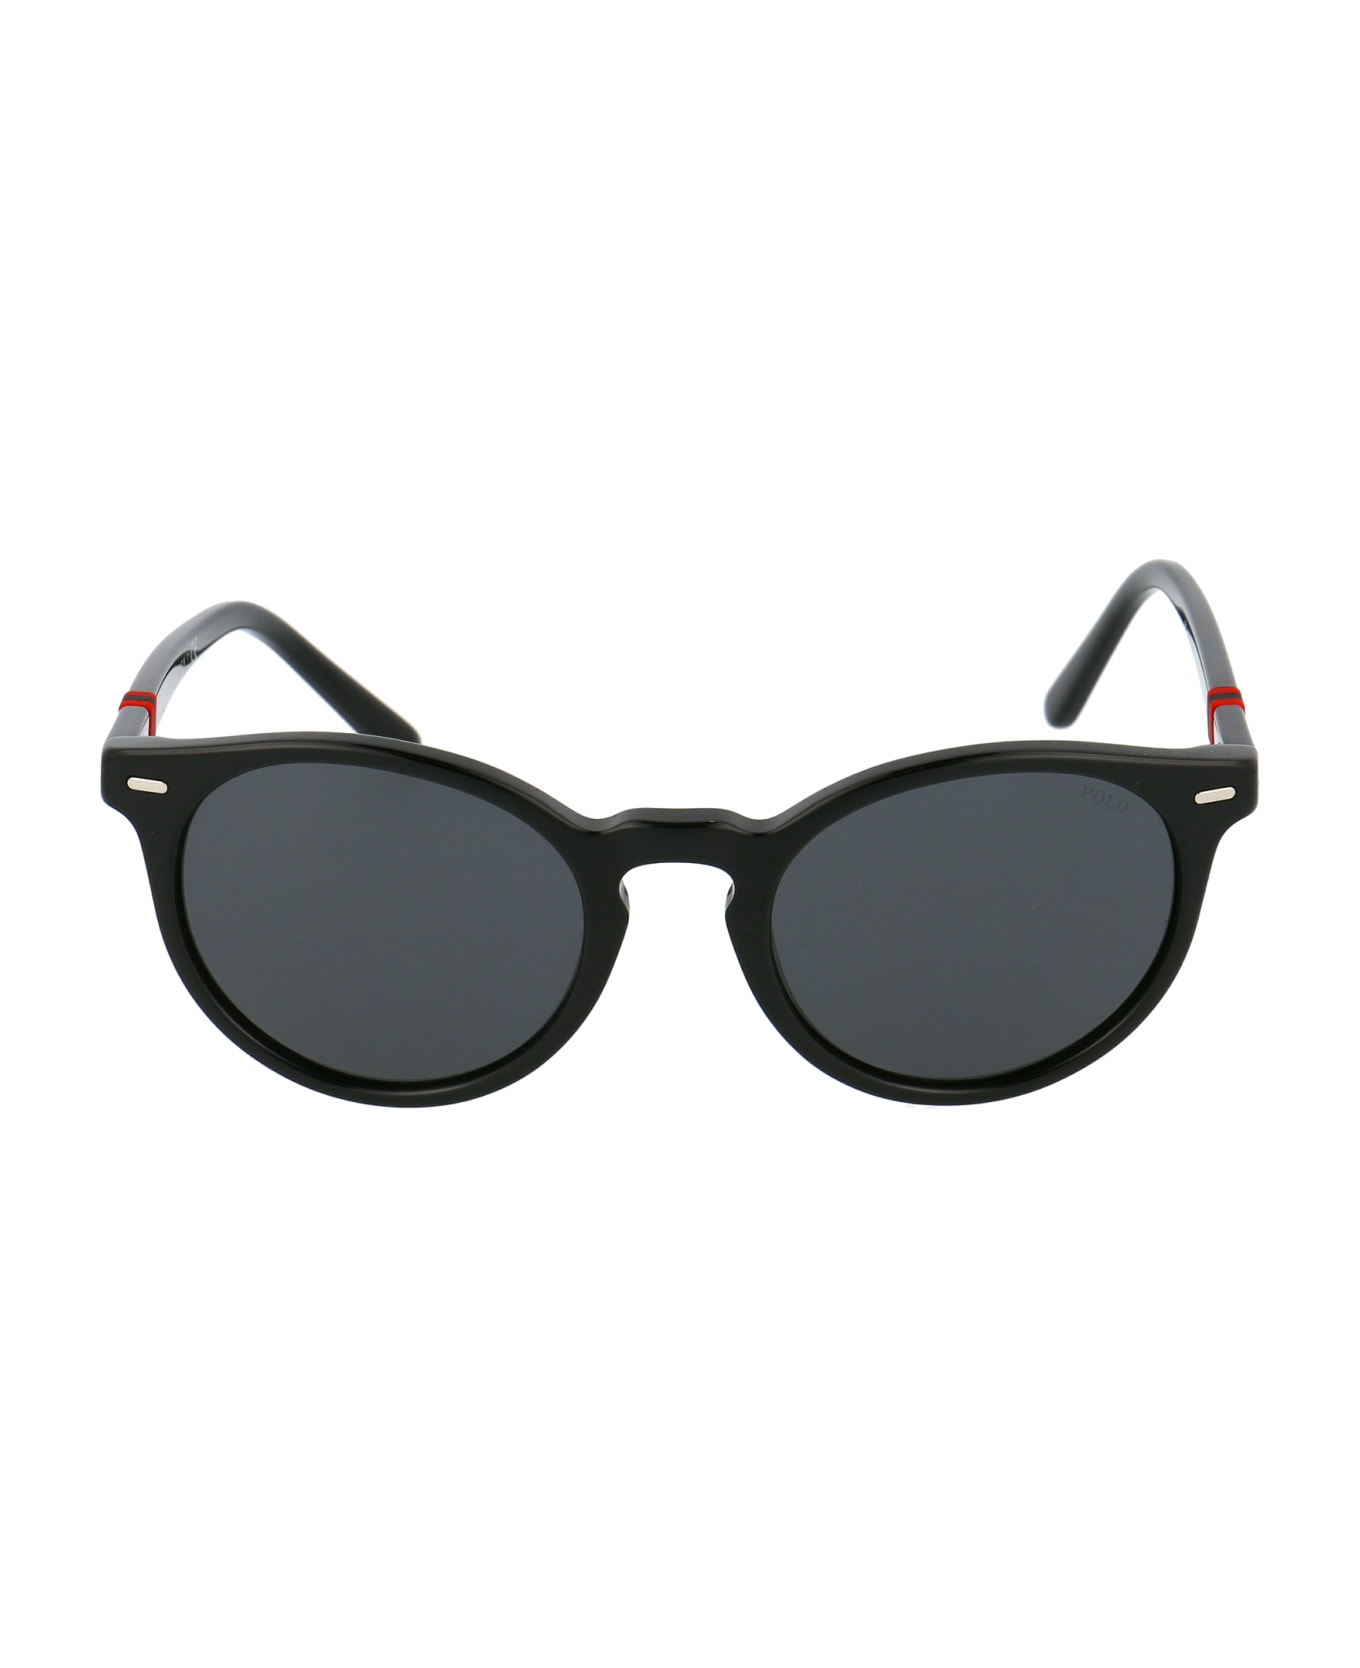 Polo Ralph Lauren 0ph4151 Sunglasses - 500187 SHINY BLACK